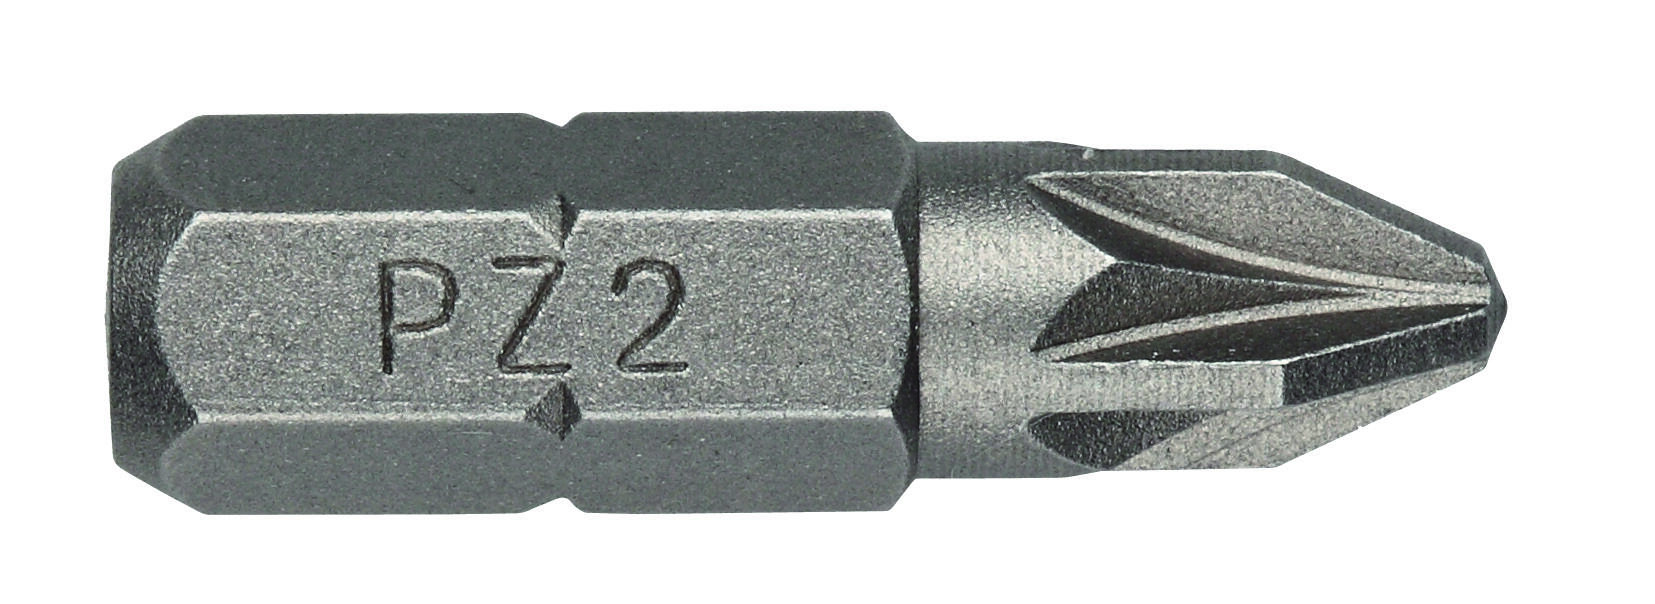 bit nástavec POZIDRIV 2  25mm (10ks)  IRWIN 0.09 Kg MAXMIX Sklad14 671122 13